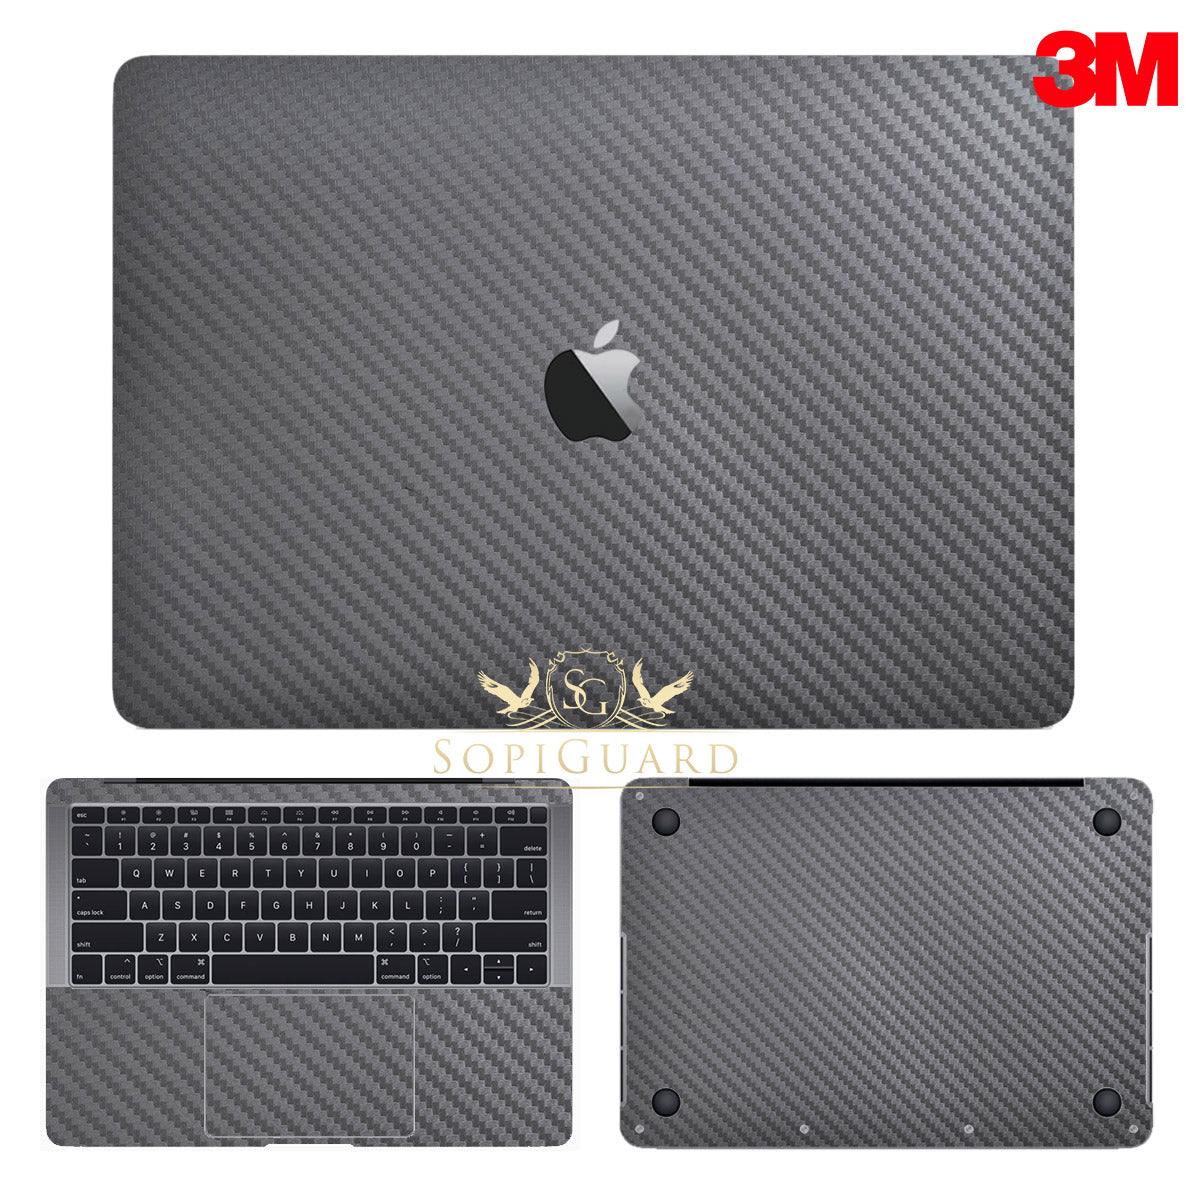 for Apple Macbook Pro 15 Retina (2012 - 2015)